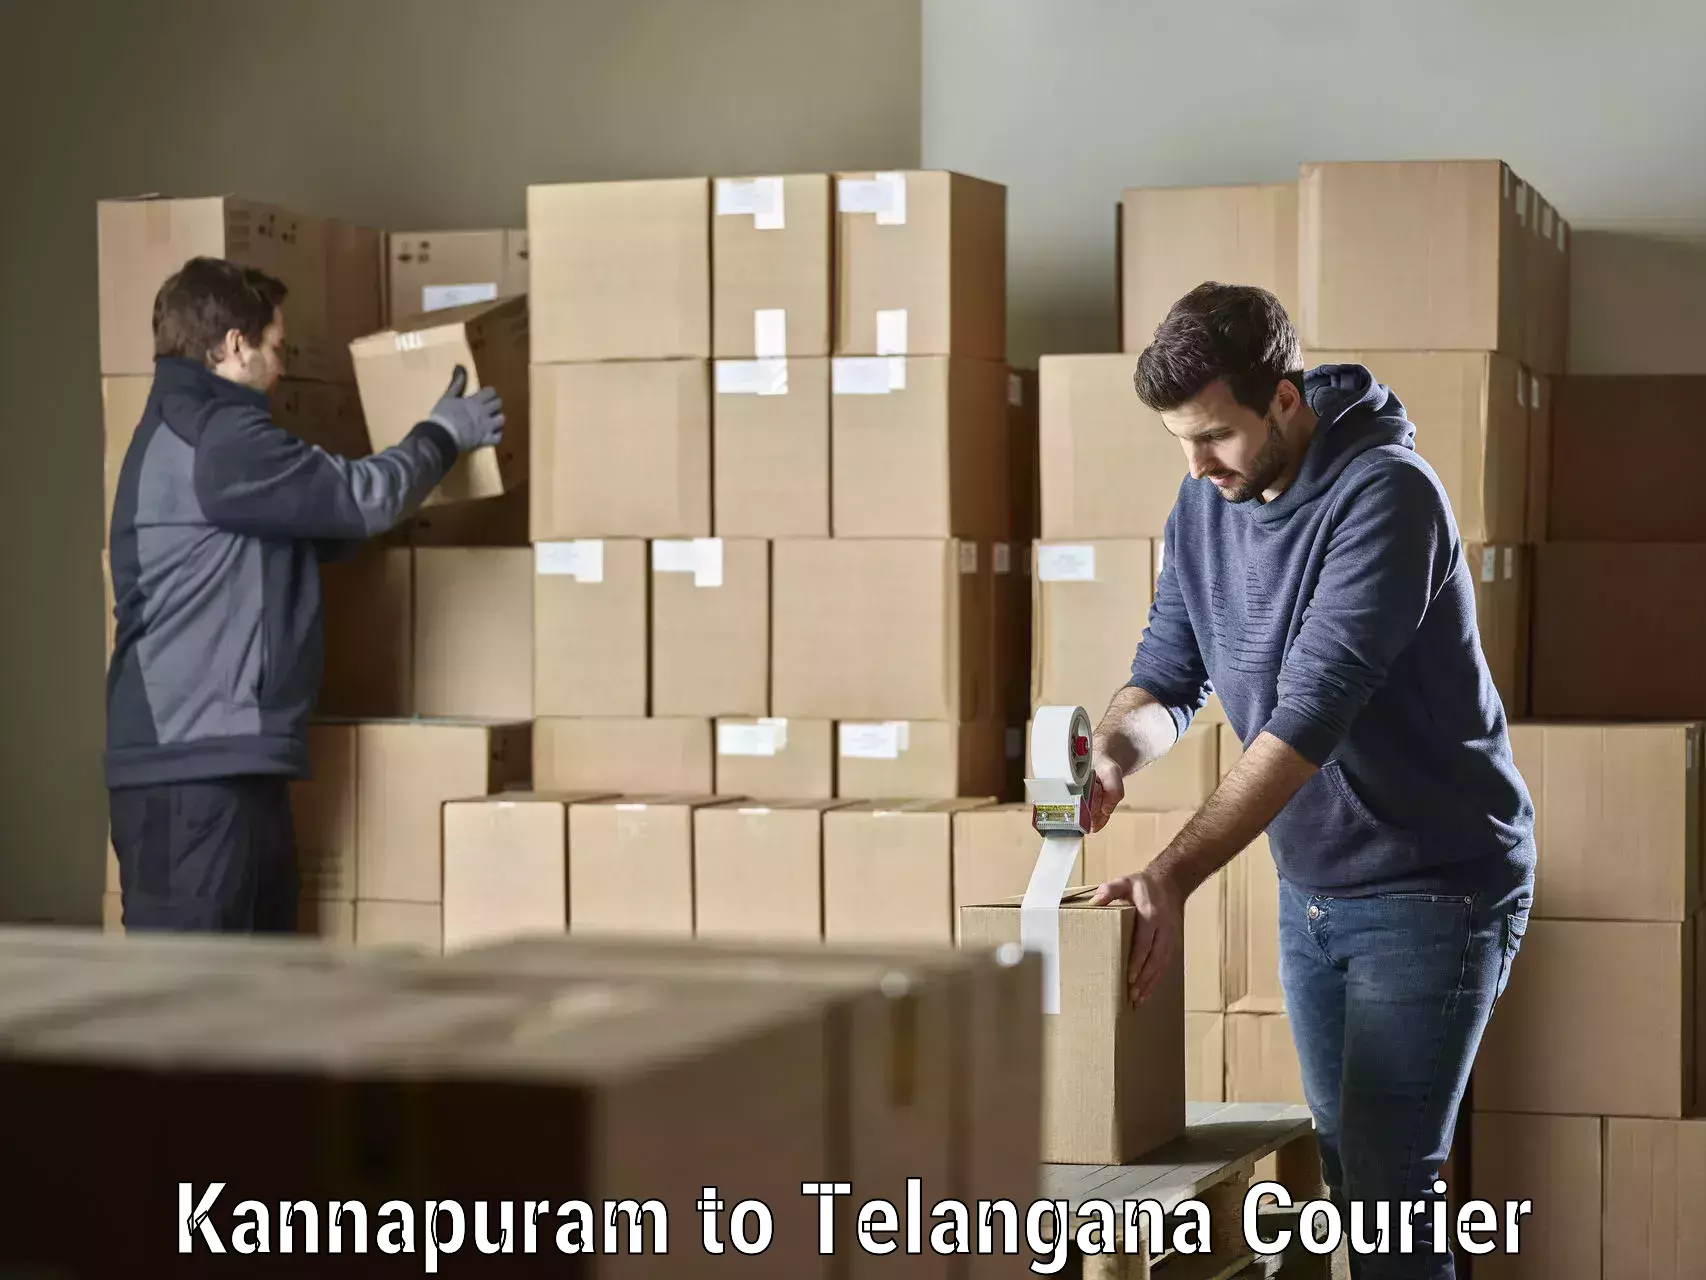 Professional courier handling Kannapuram to Bachupally